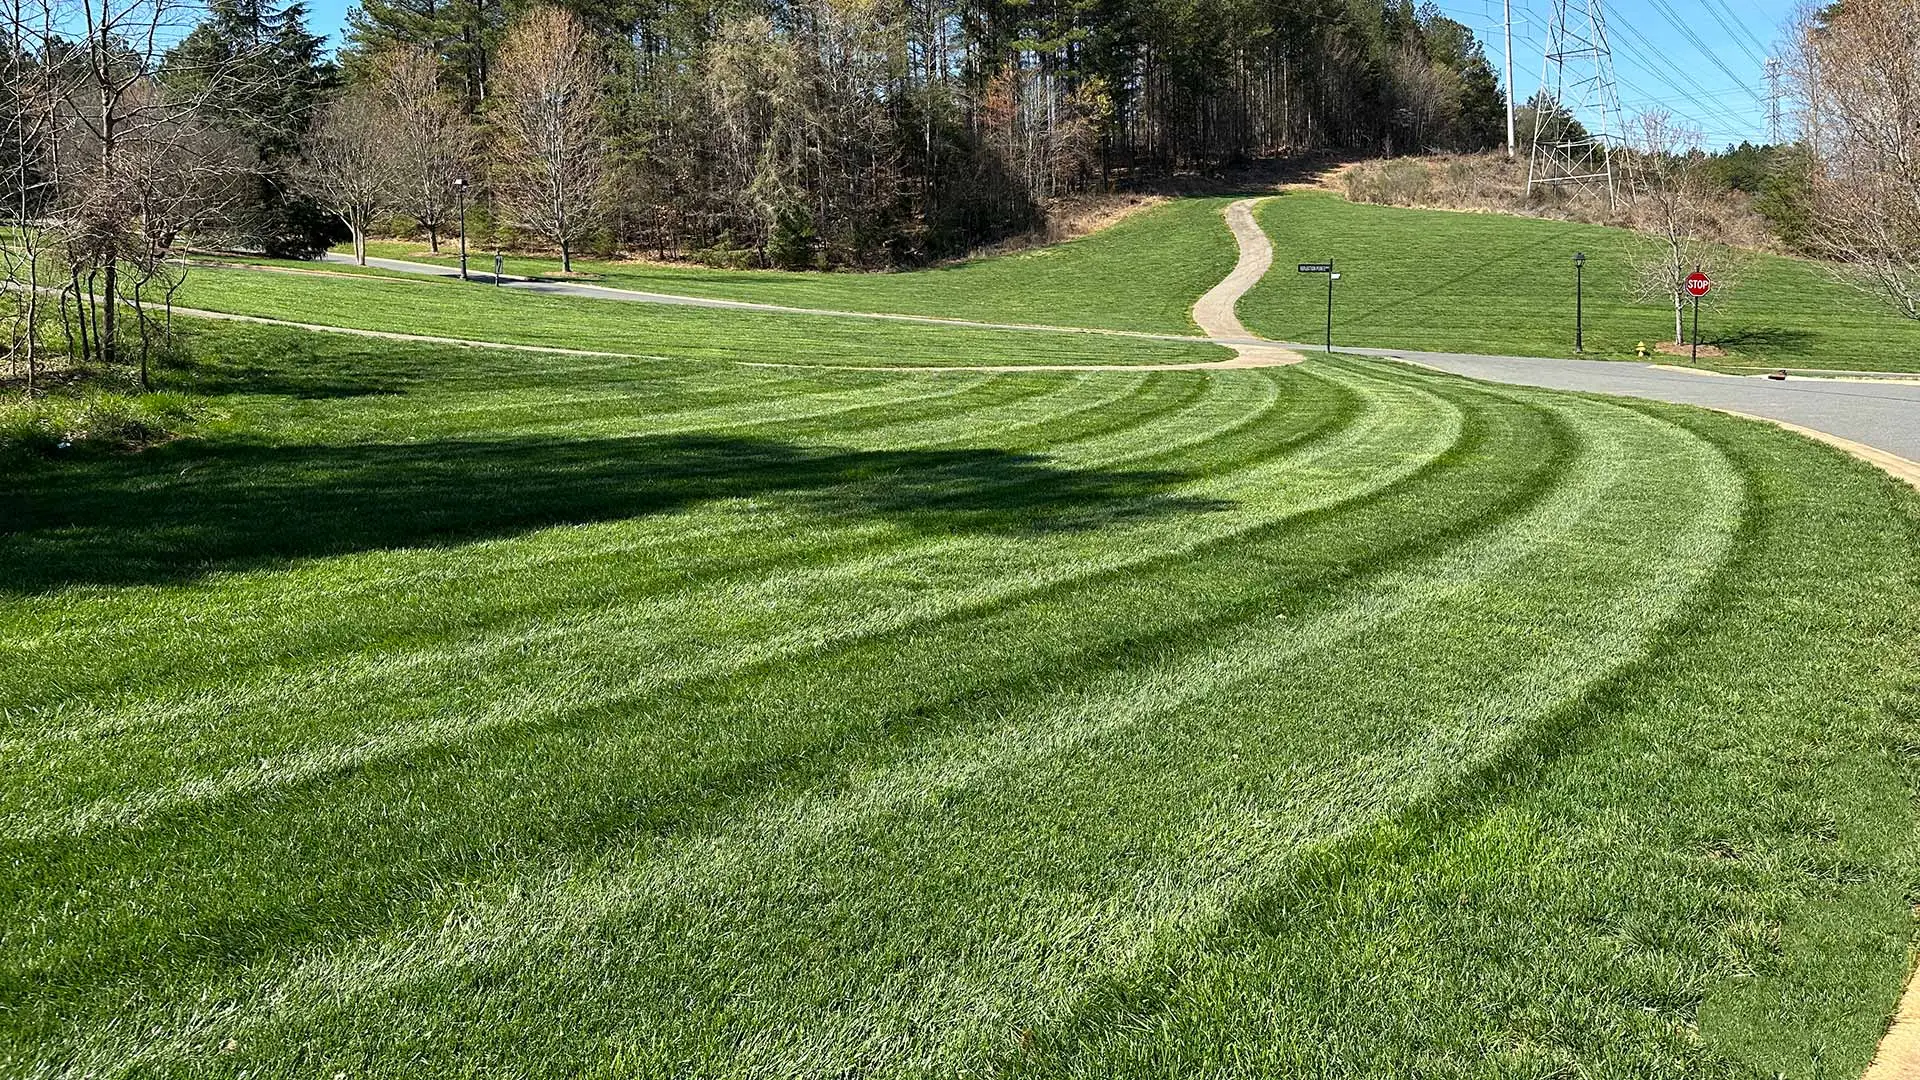 HOA Lawn Transformation Project in Belmont, NC - Fertilization, Aeration & More